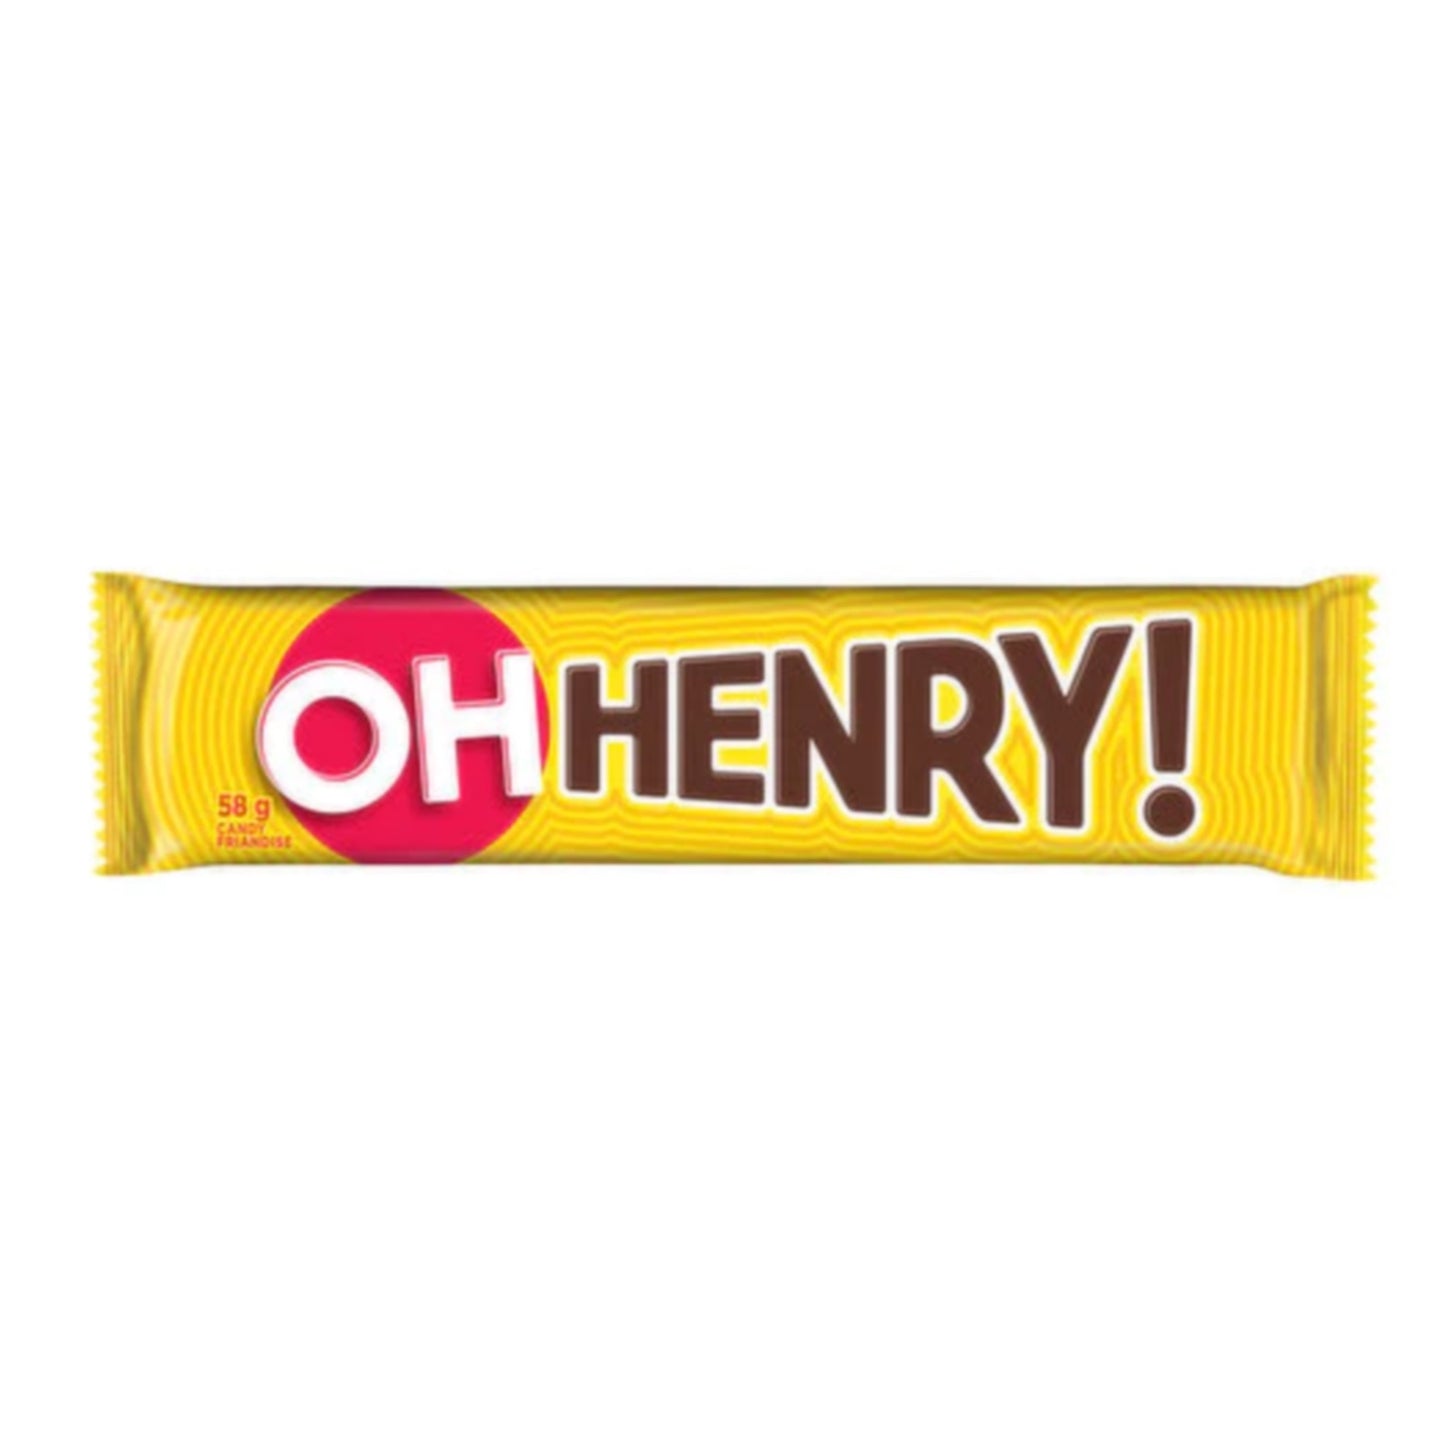 Oh Henry! Bar